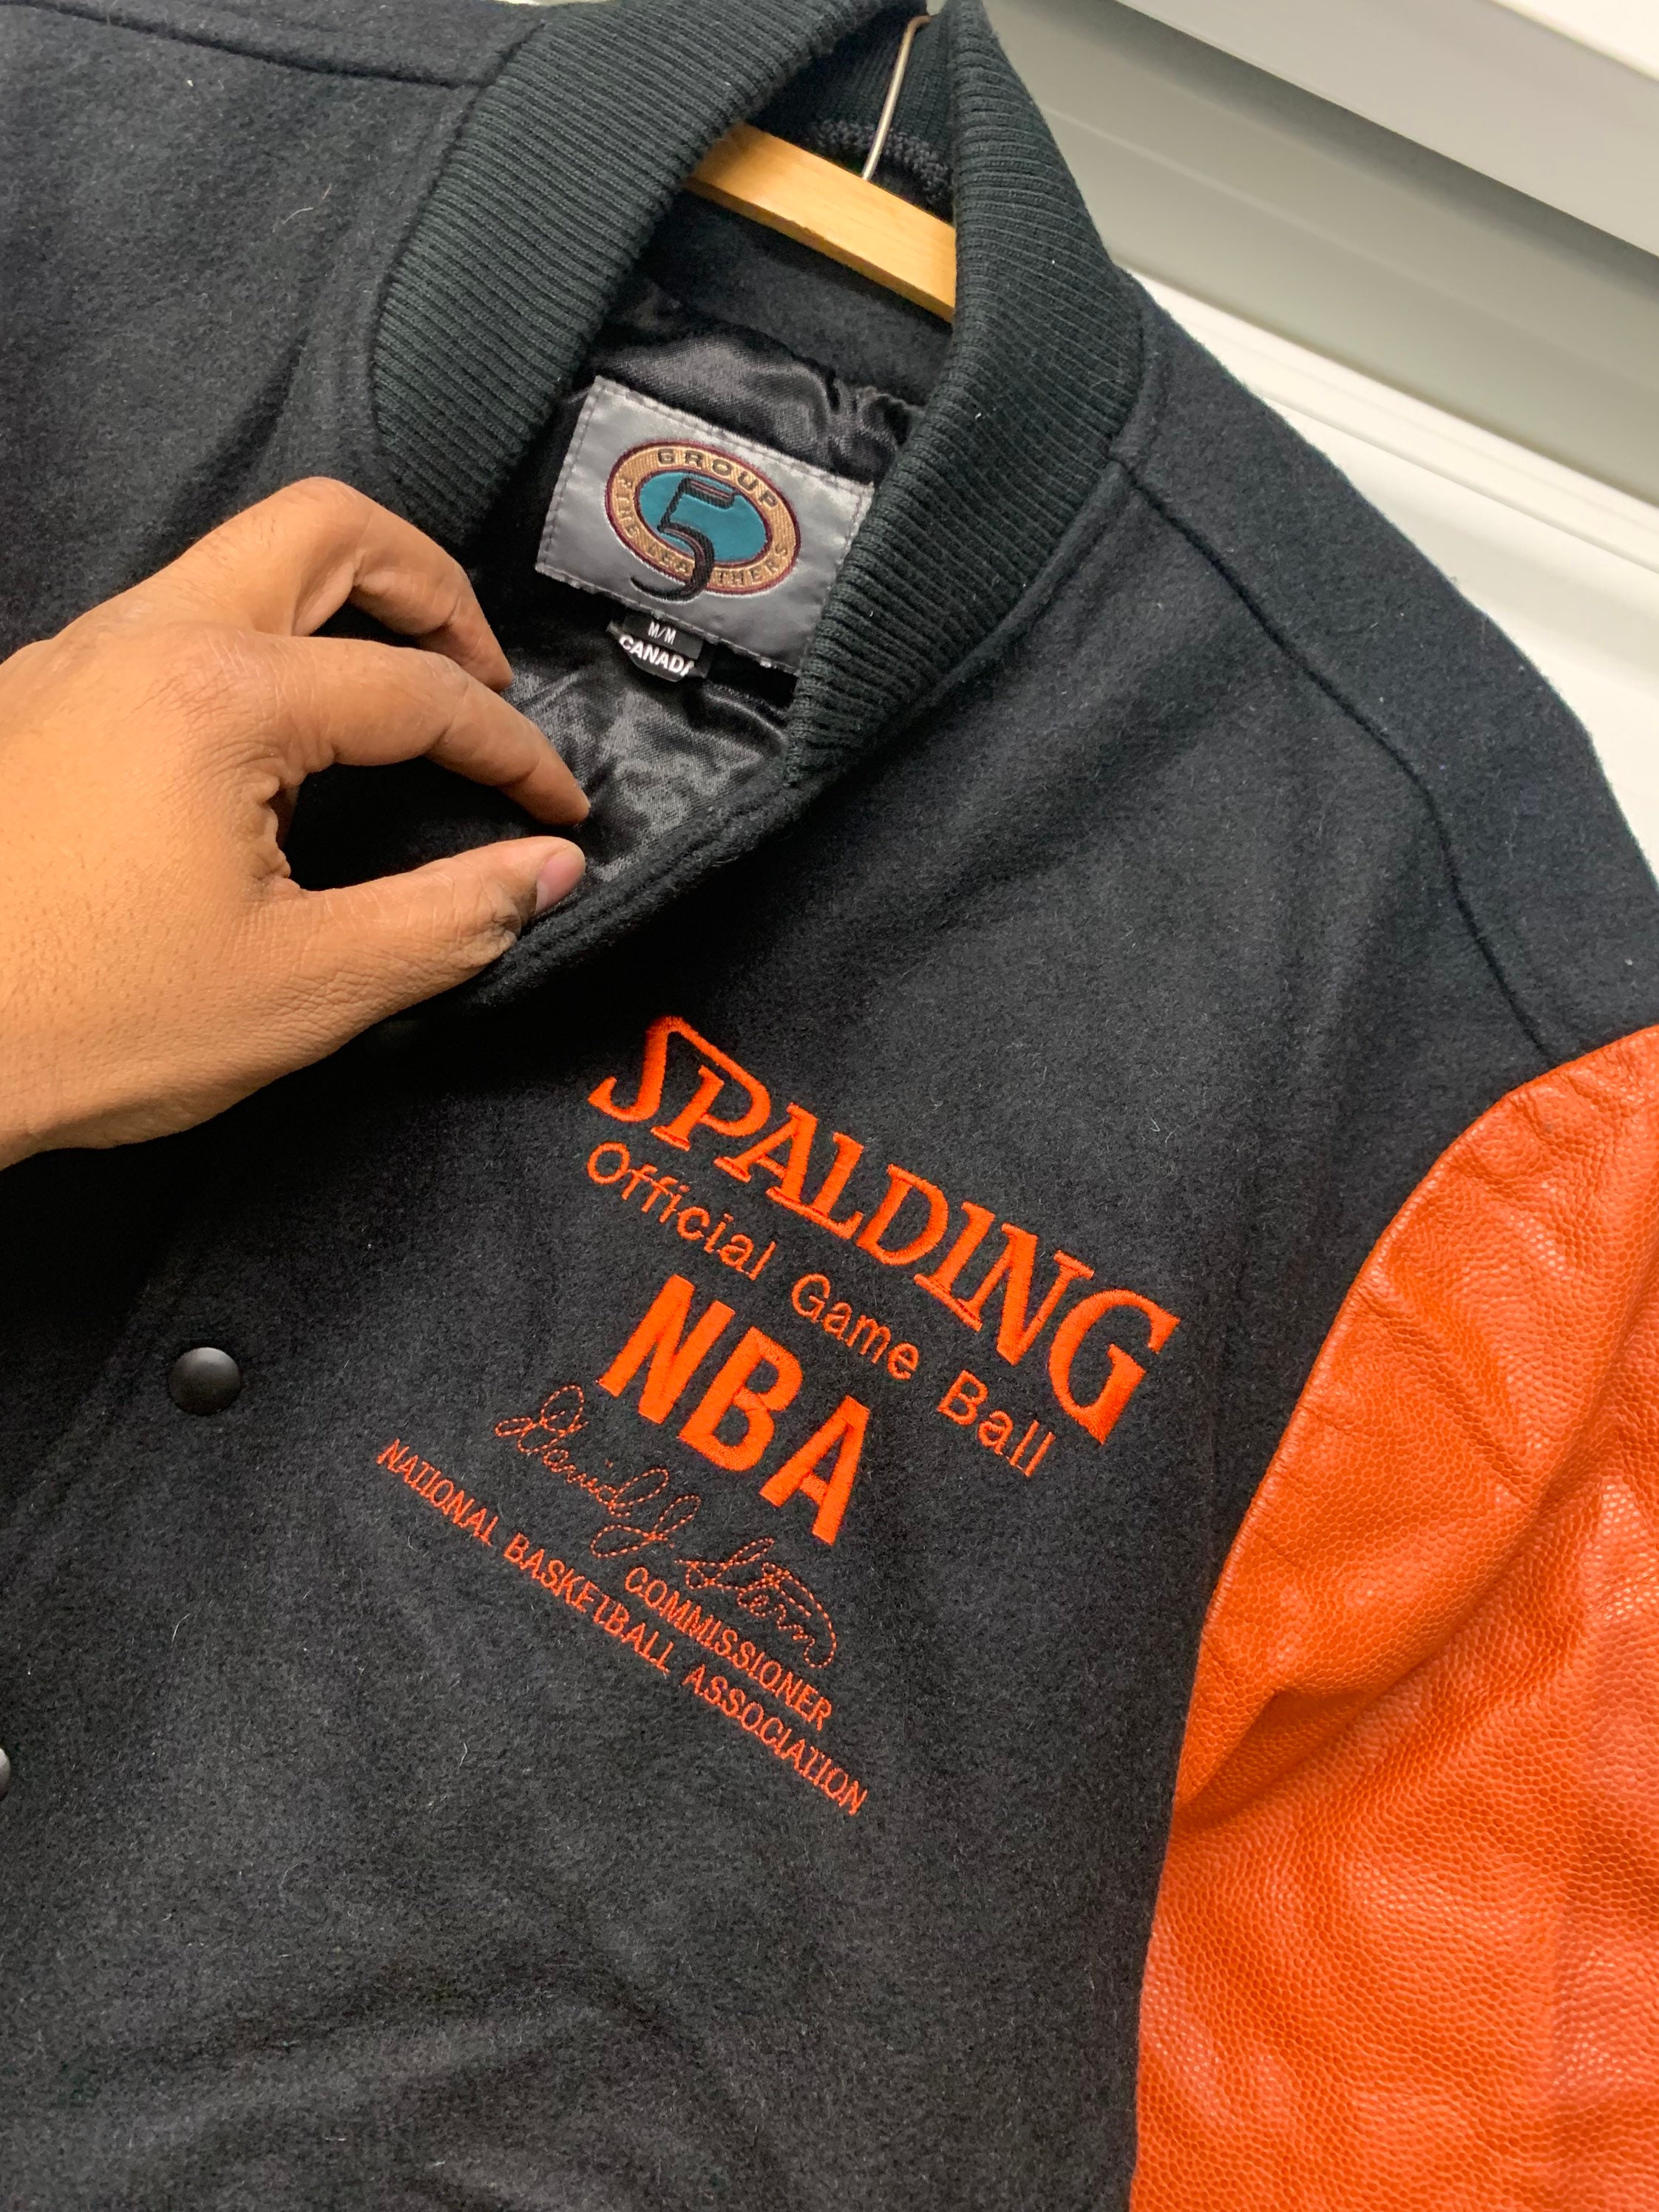 Vintage 90s Spalding Basketball Varsity Leather Sleeved -  Finland